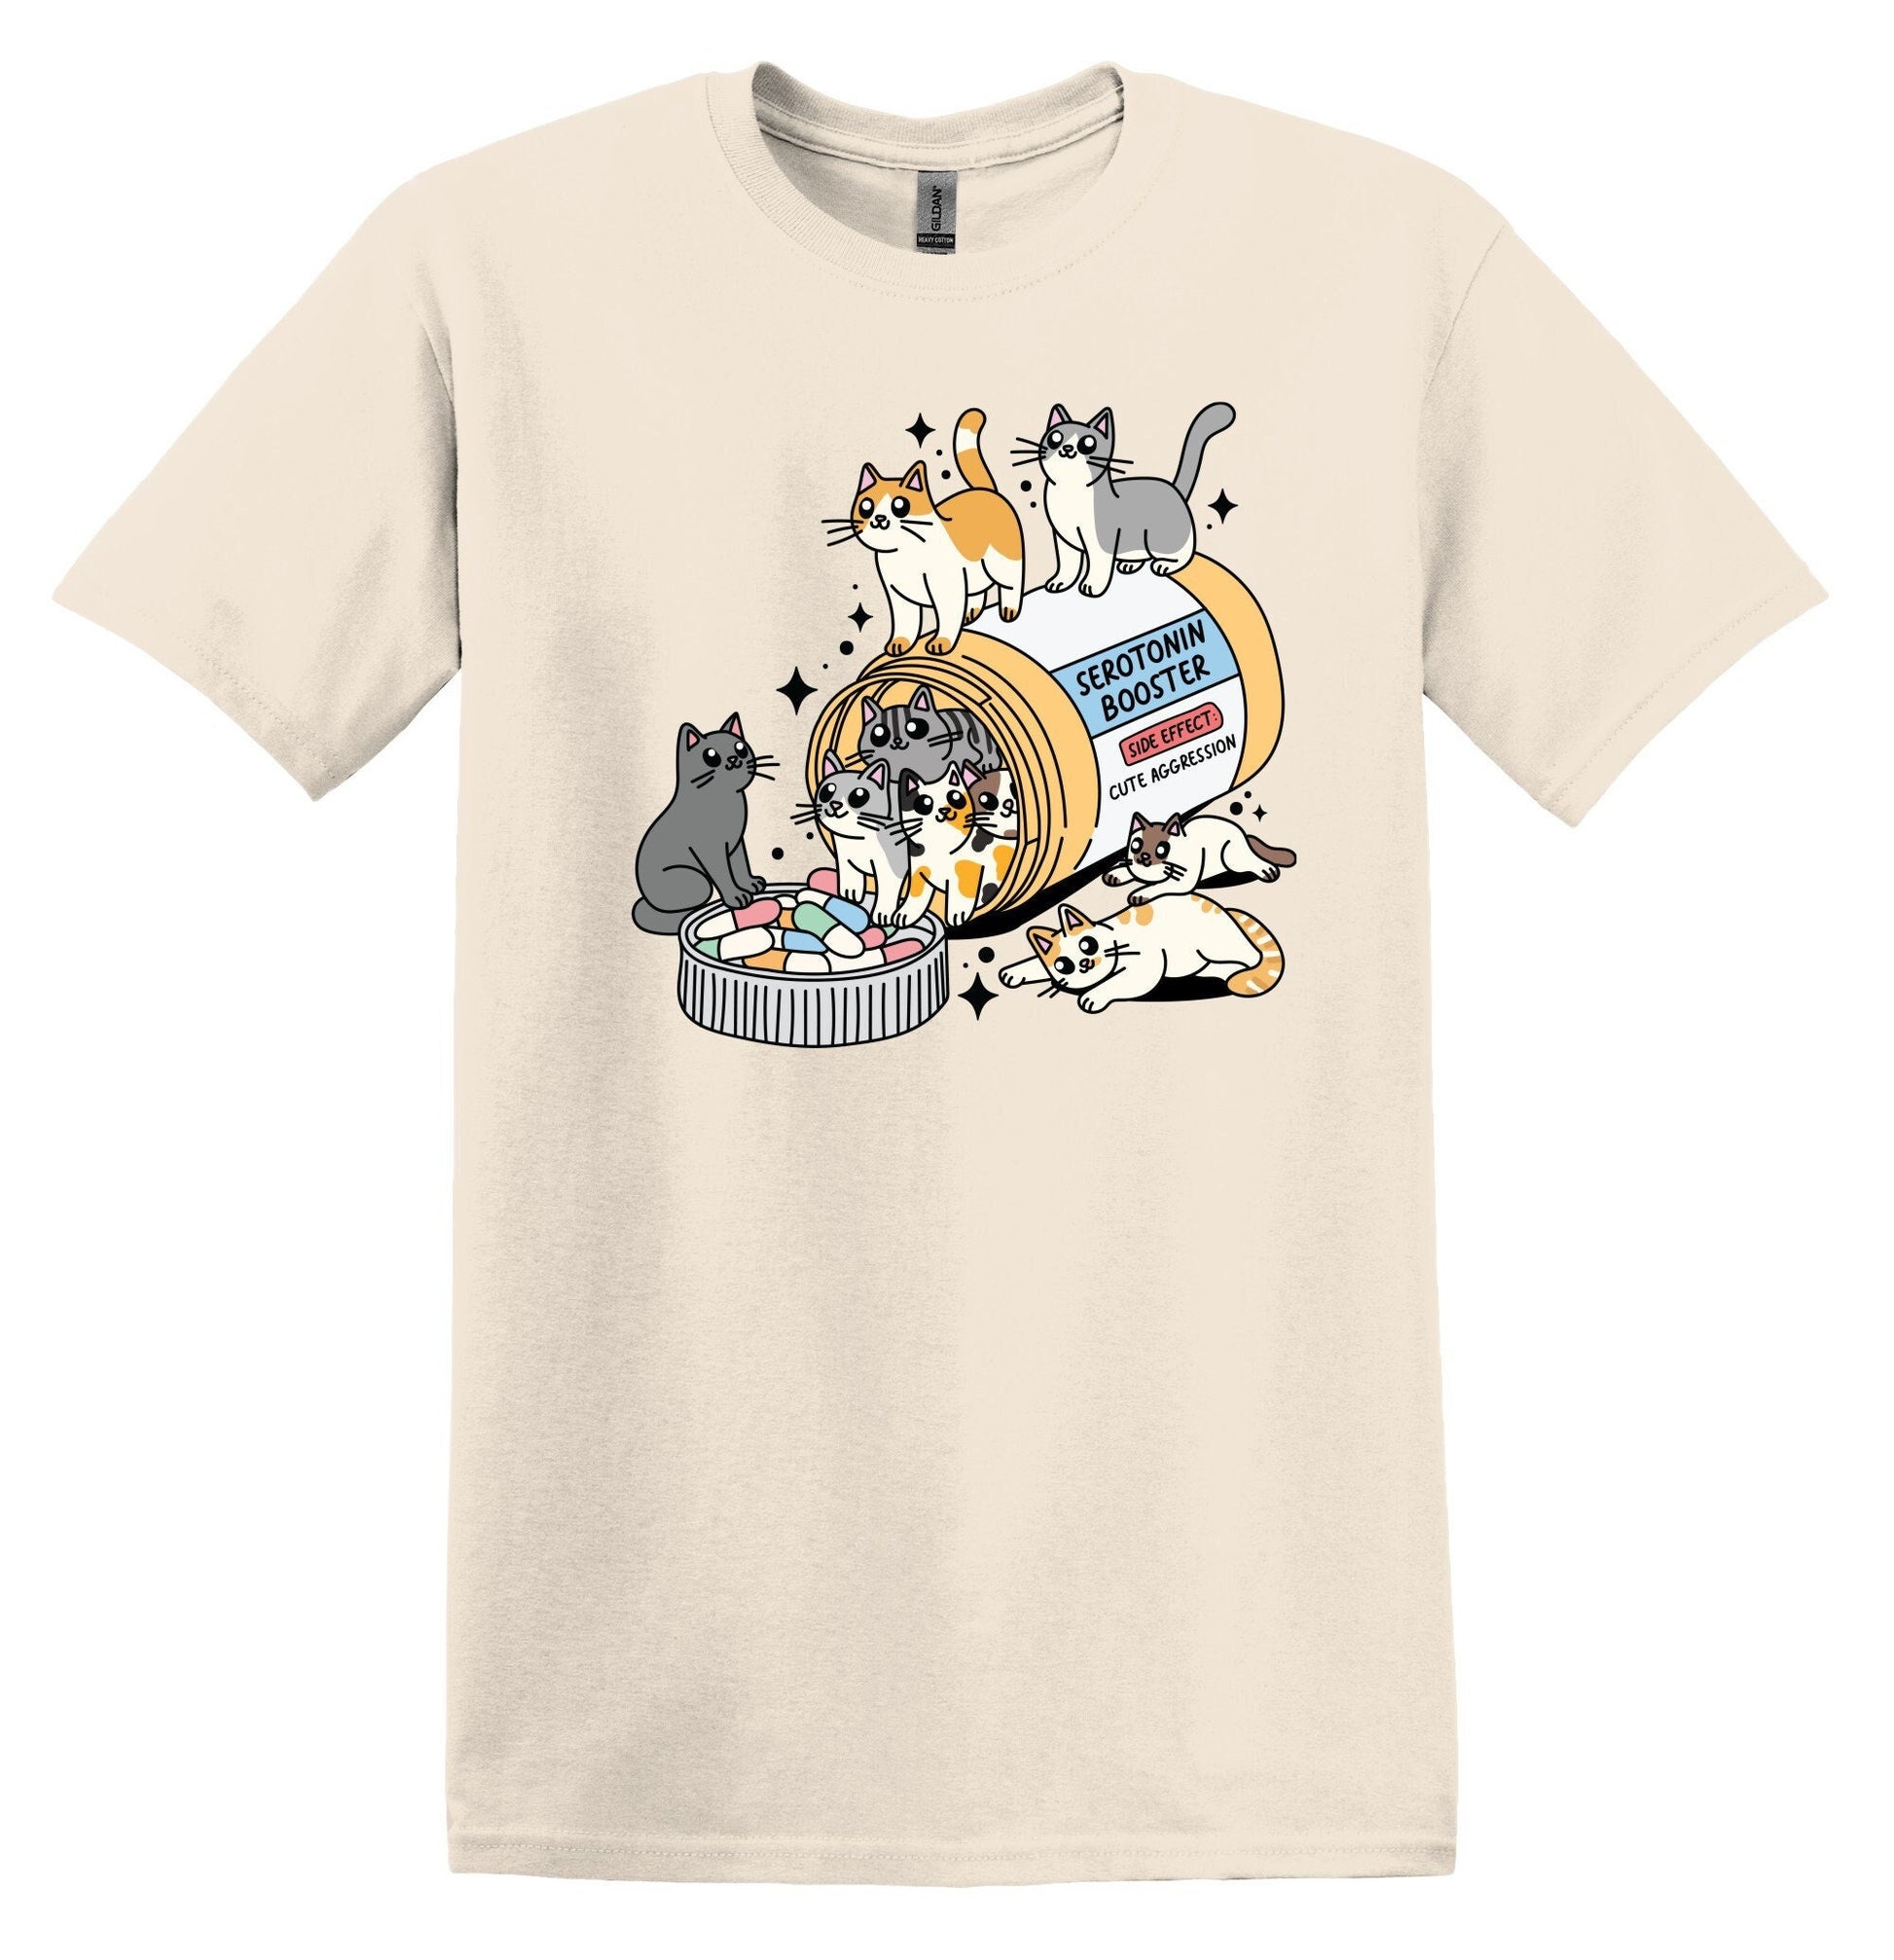 Serotonin Booster Cats Shirt Mental Health TShirt Funny Mental Health Shirt Mental Health Shirt Funny Cat Shirt